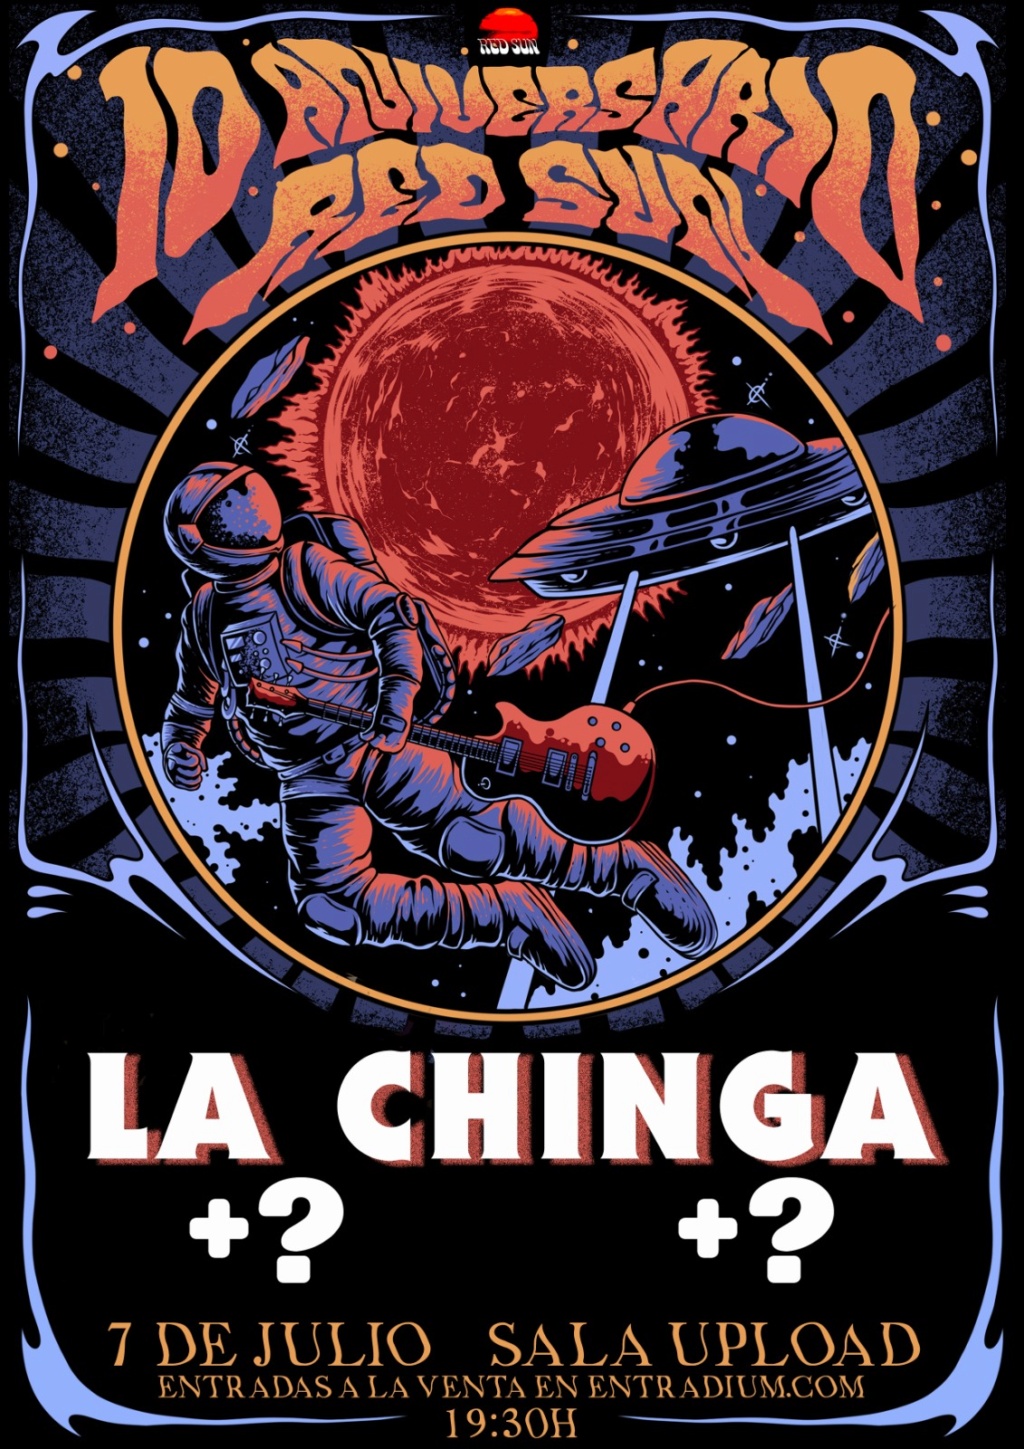 LA CHINGA **Freewheelin' across Europe March Tour ** / Nuevo lp y tour! - Página 7 Chng10